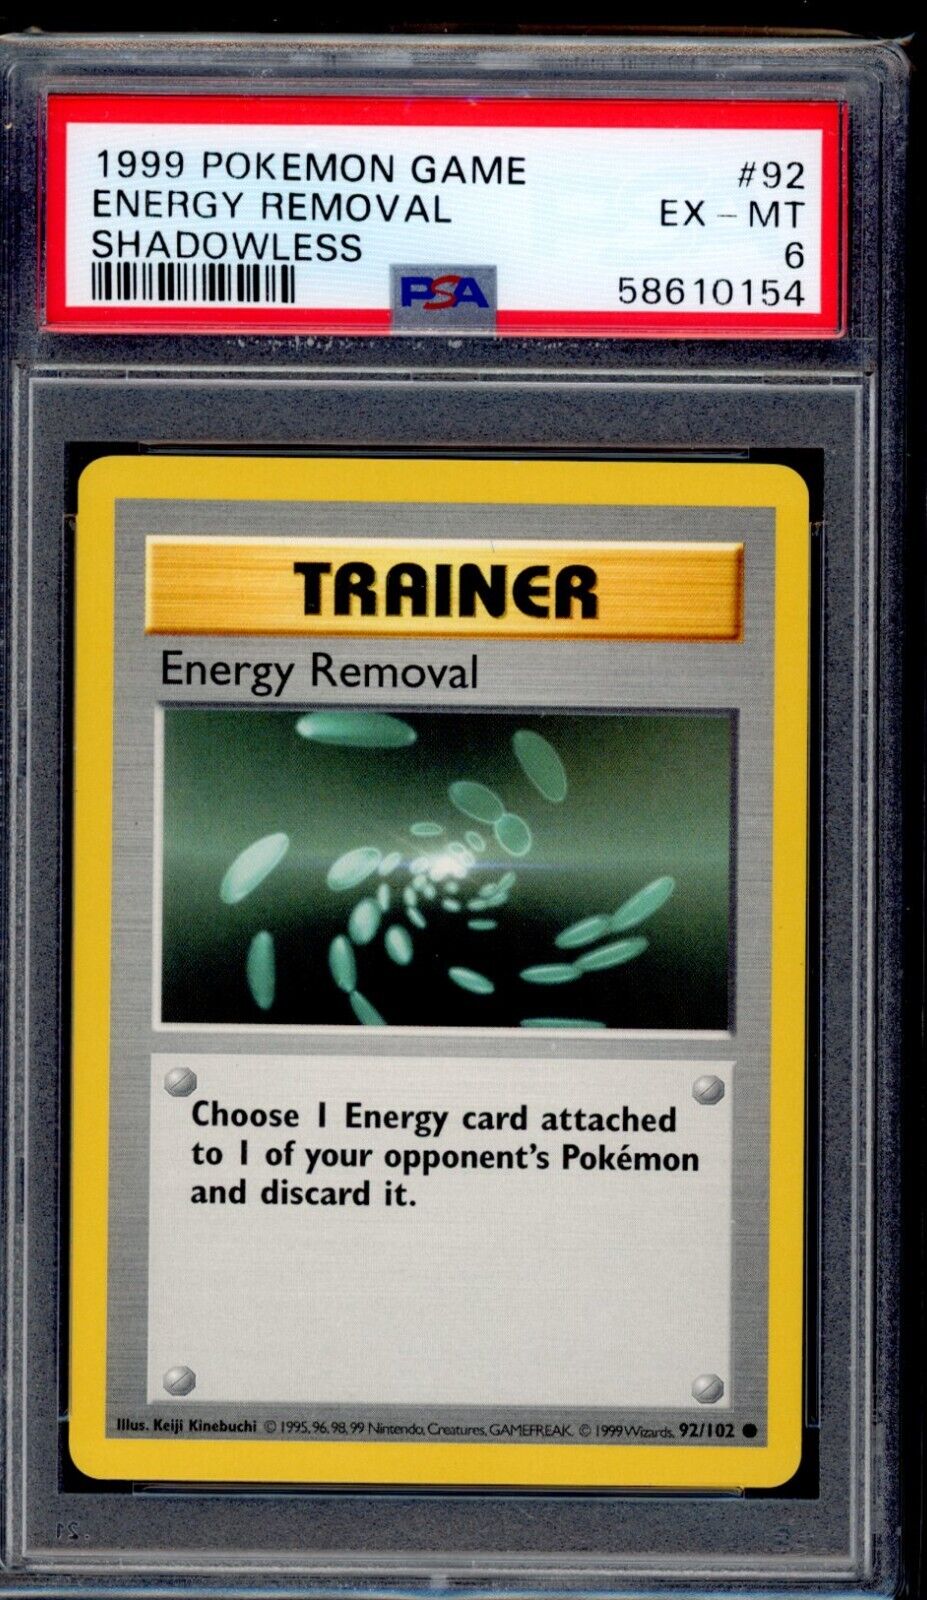 PSA 6 Energy Removal 1999 Pokemon Card 92/102 Shadowless Base Set